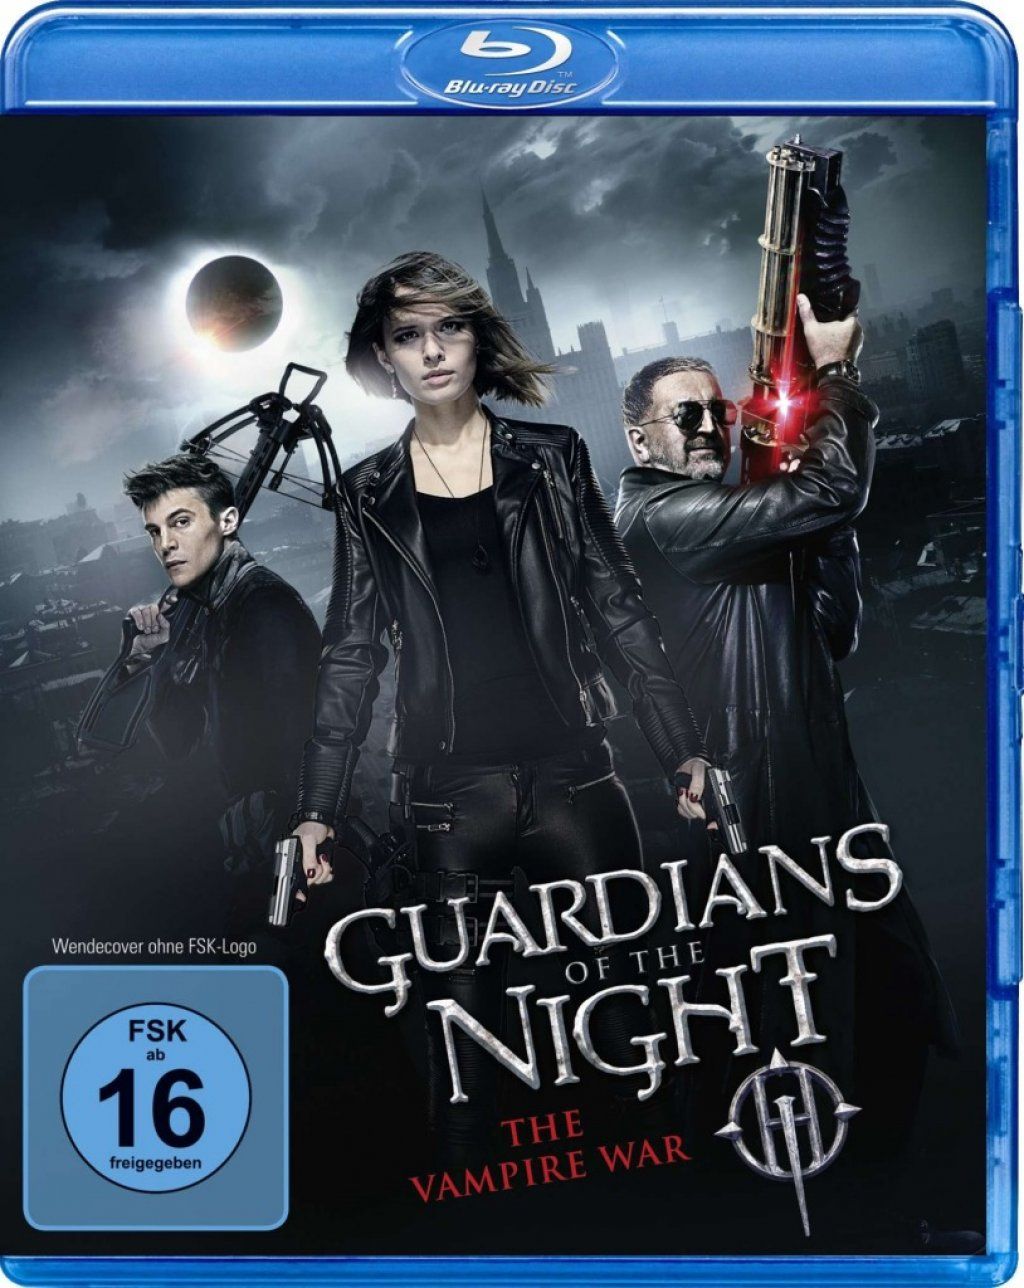 Guardians of the Night - The Vampire War (BLURAY)